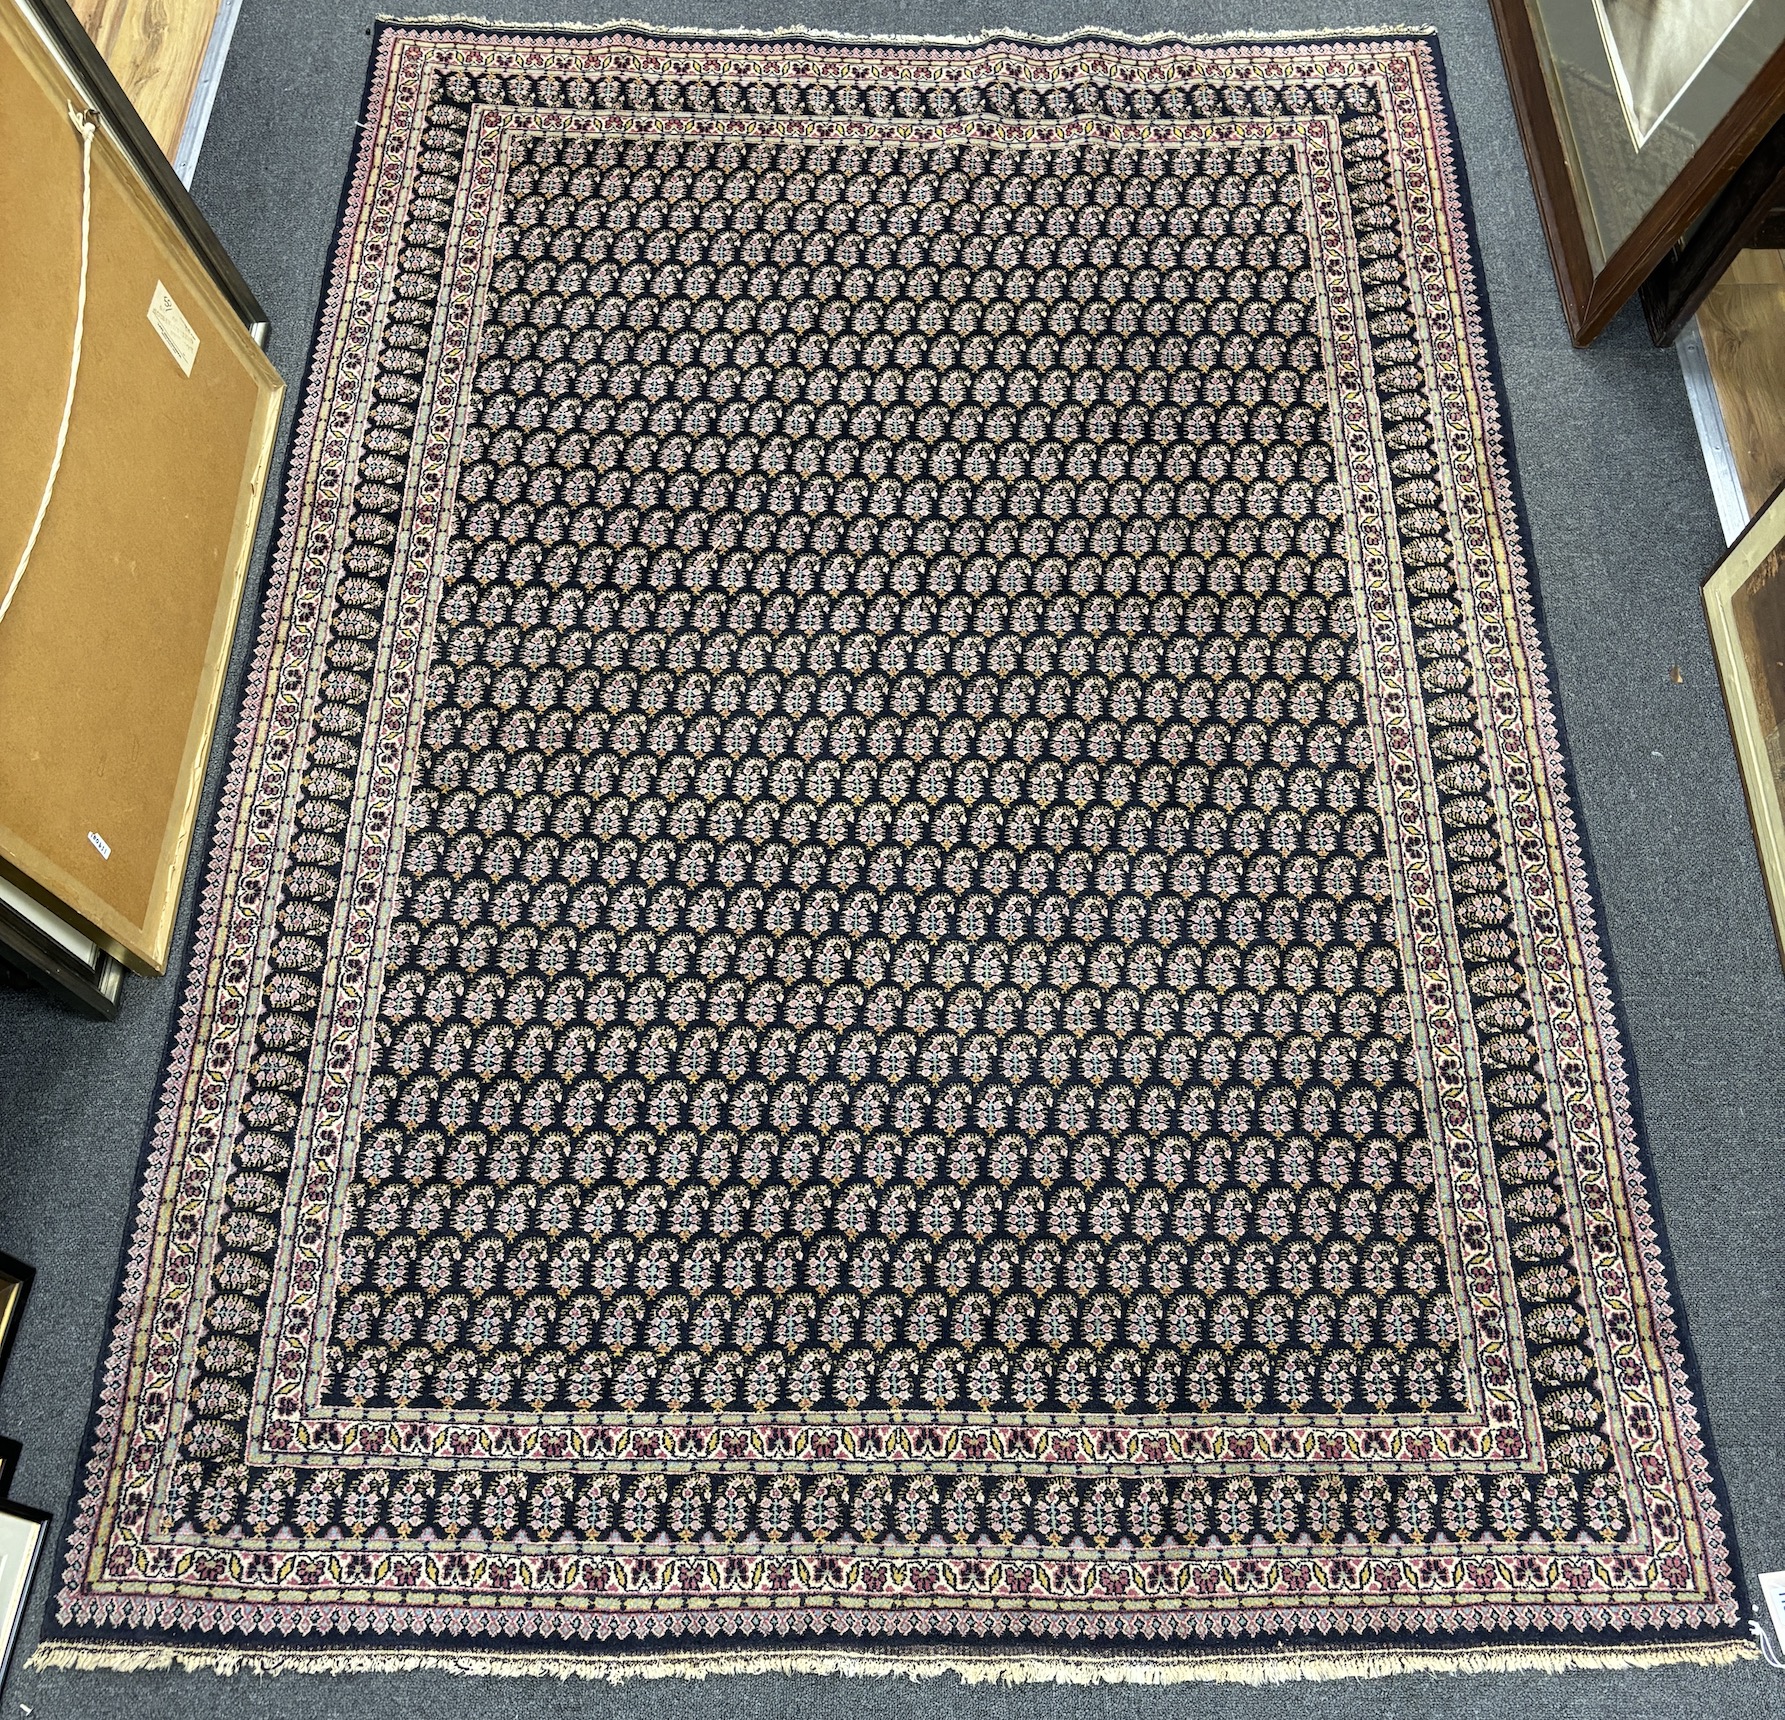 An antique Amritsar rug, 220 x 156cm                                                                                                                                                                                        